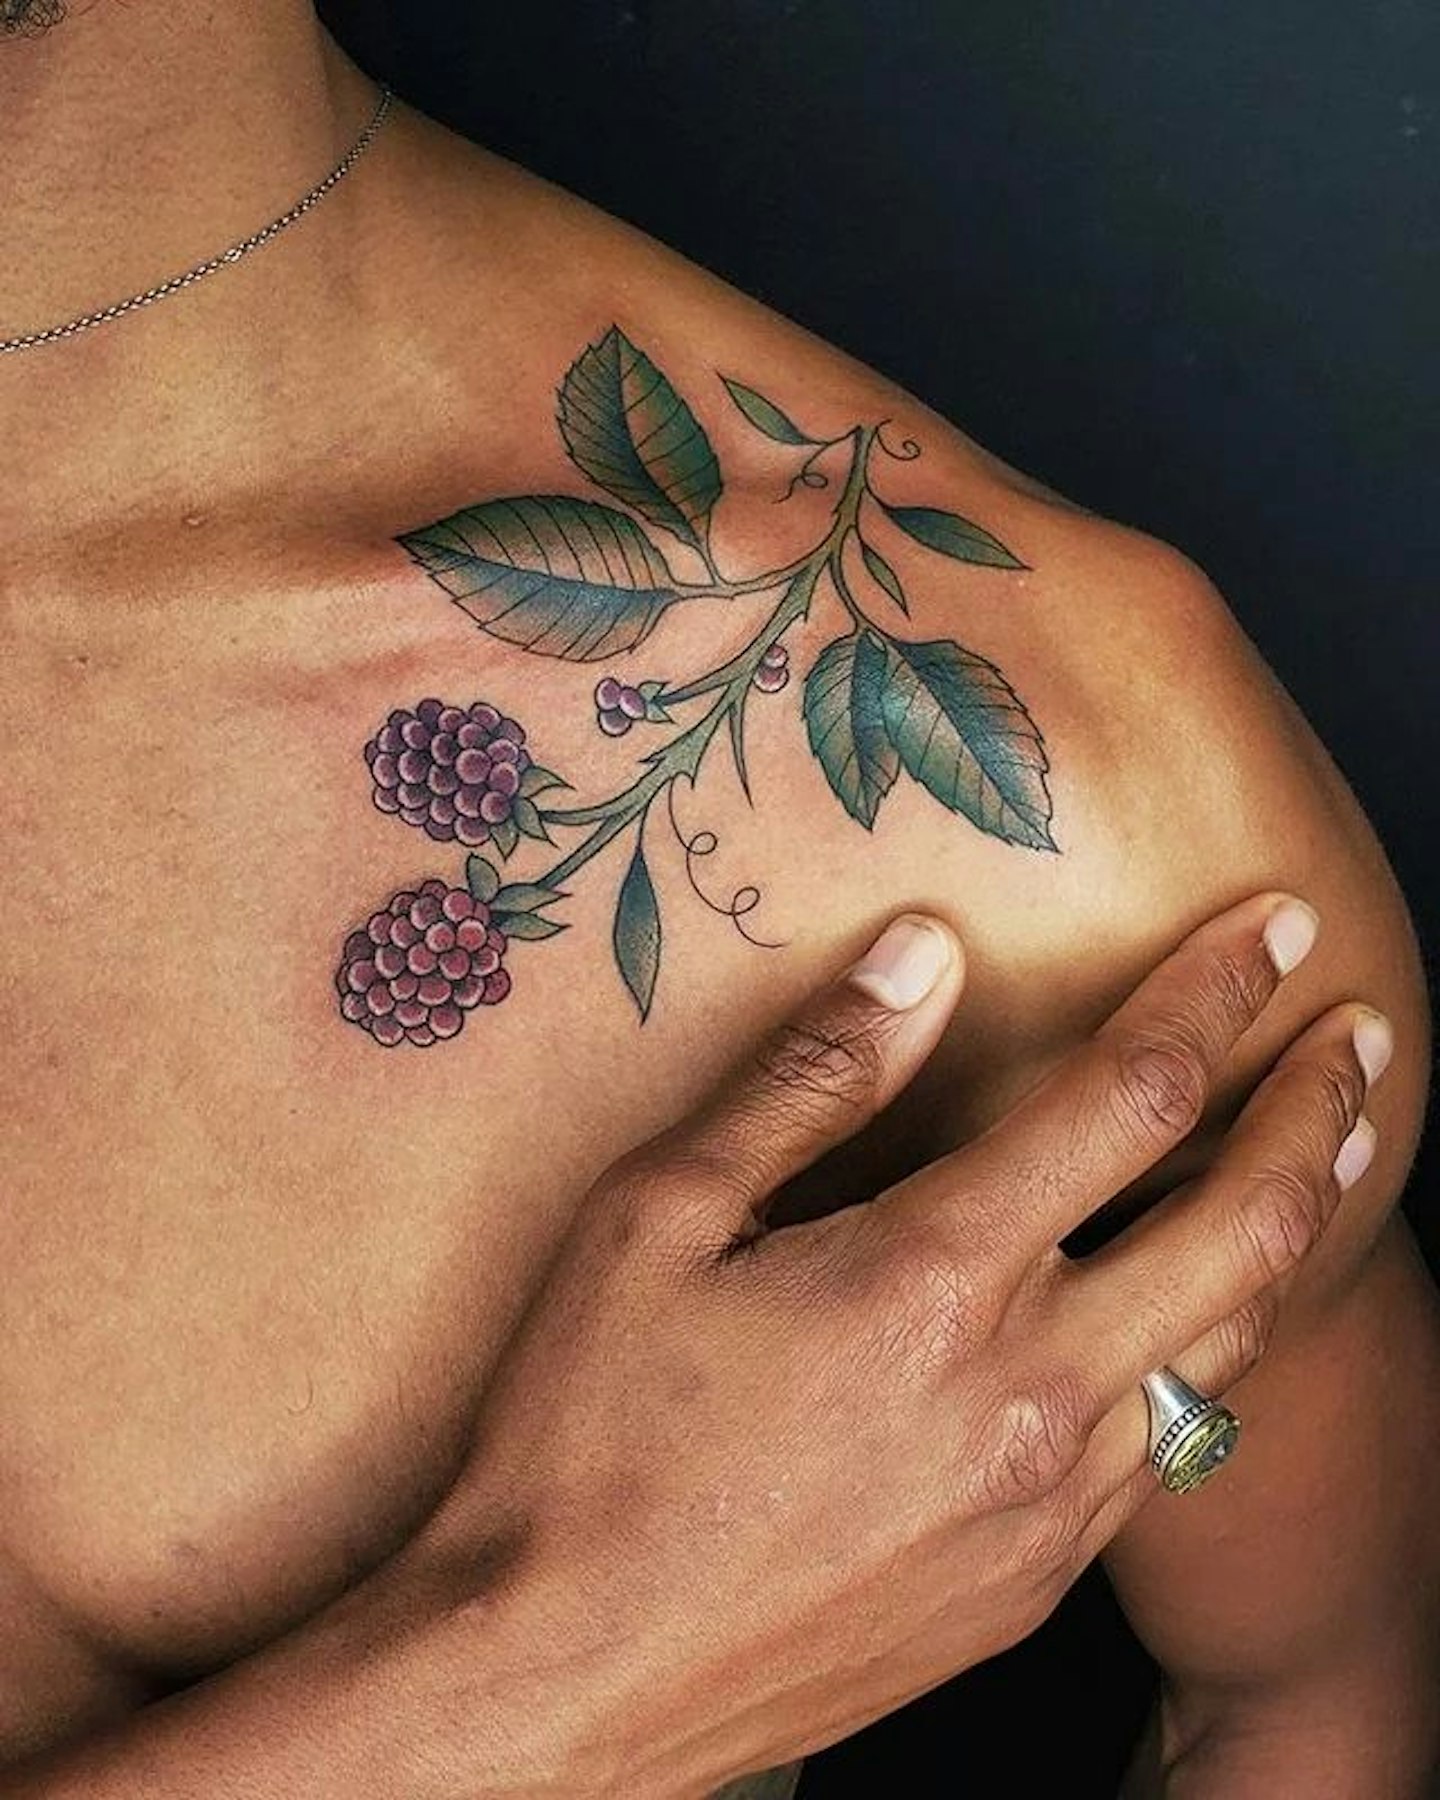 White Tattoos on Dark Skin Tones: Everything You Need to Know